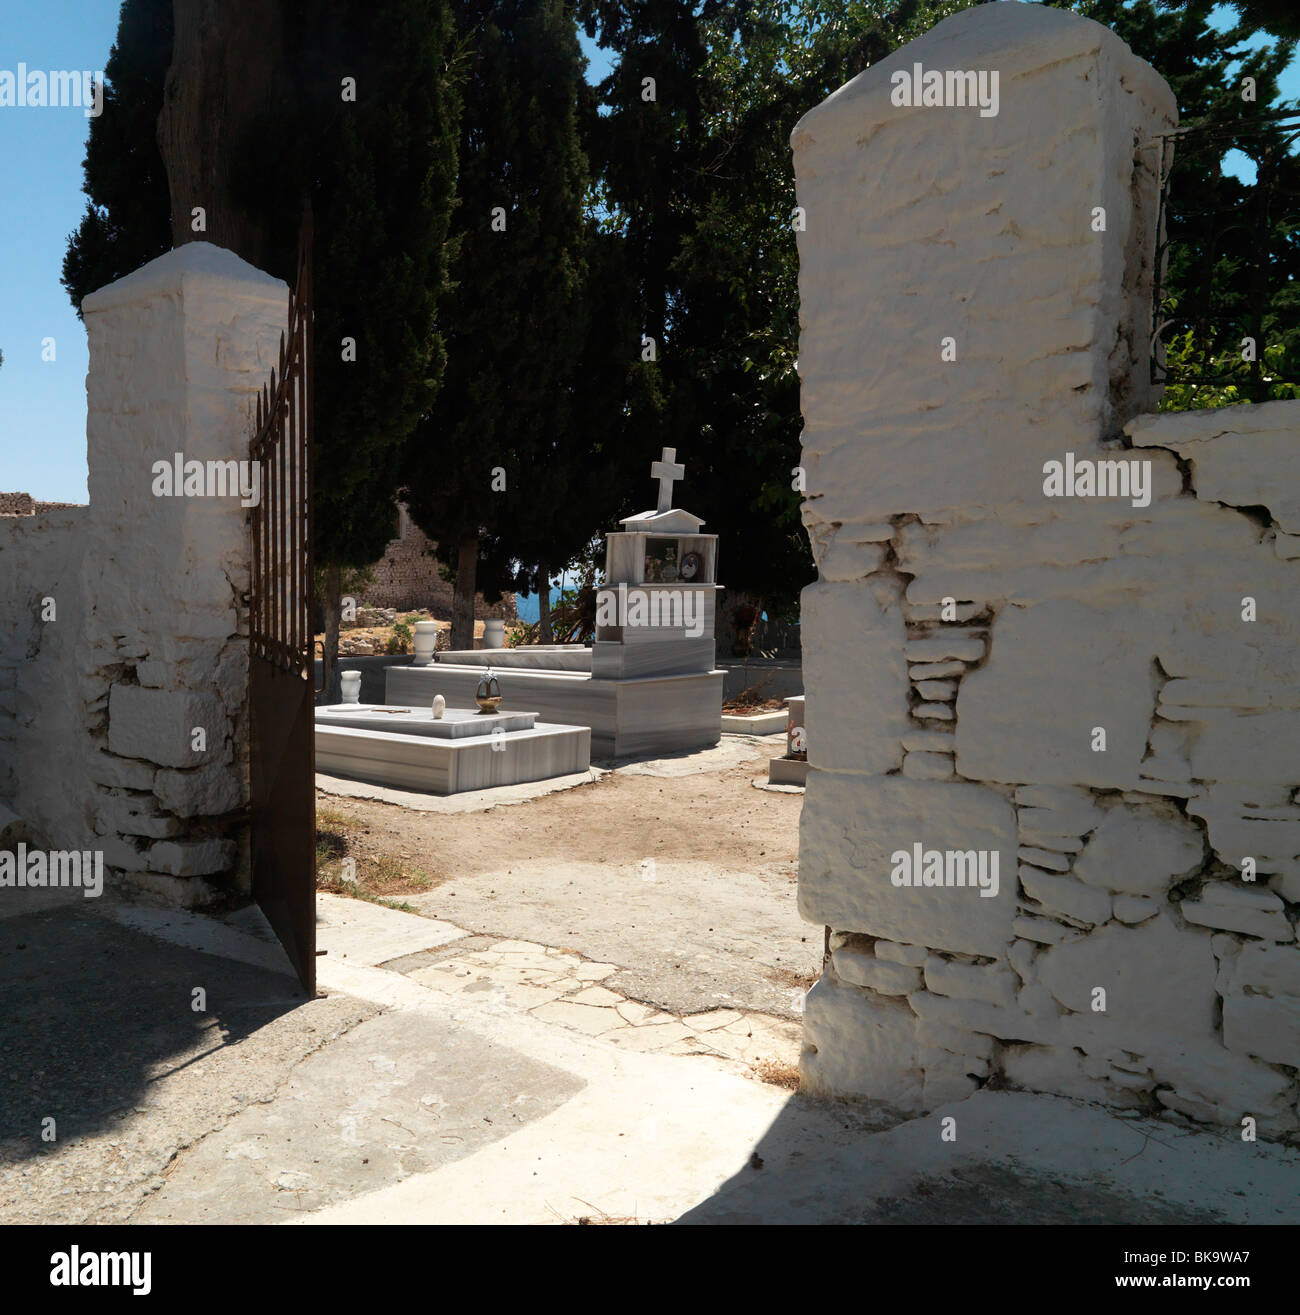 Samos Greece Pythagorian Metamorphis Church Cemetery Cross On Gravestone Stock Photo